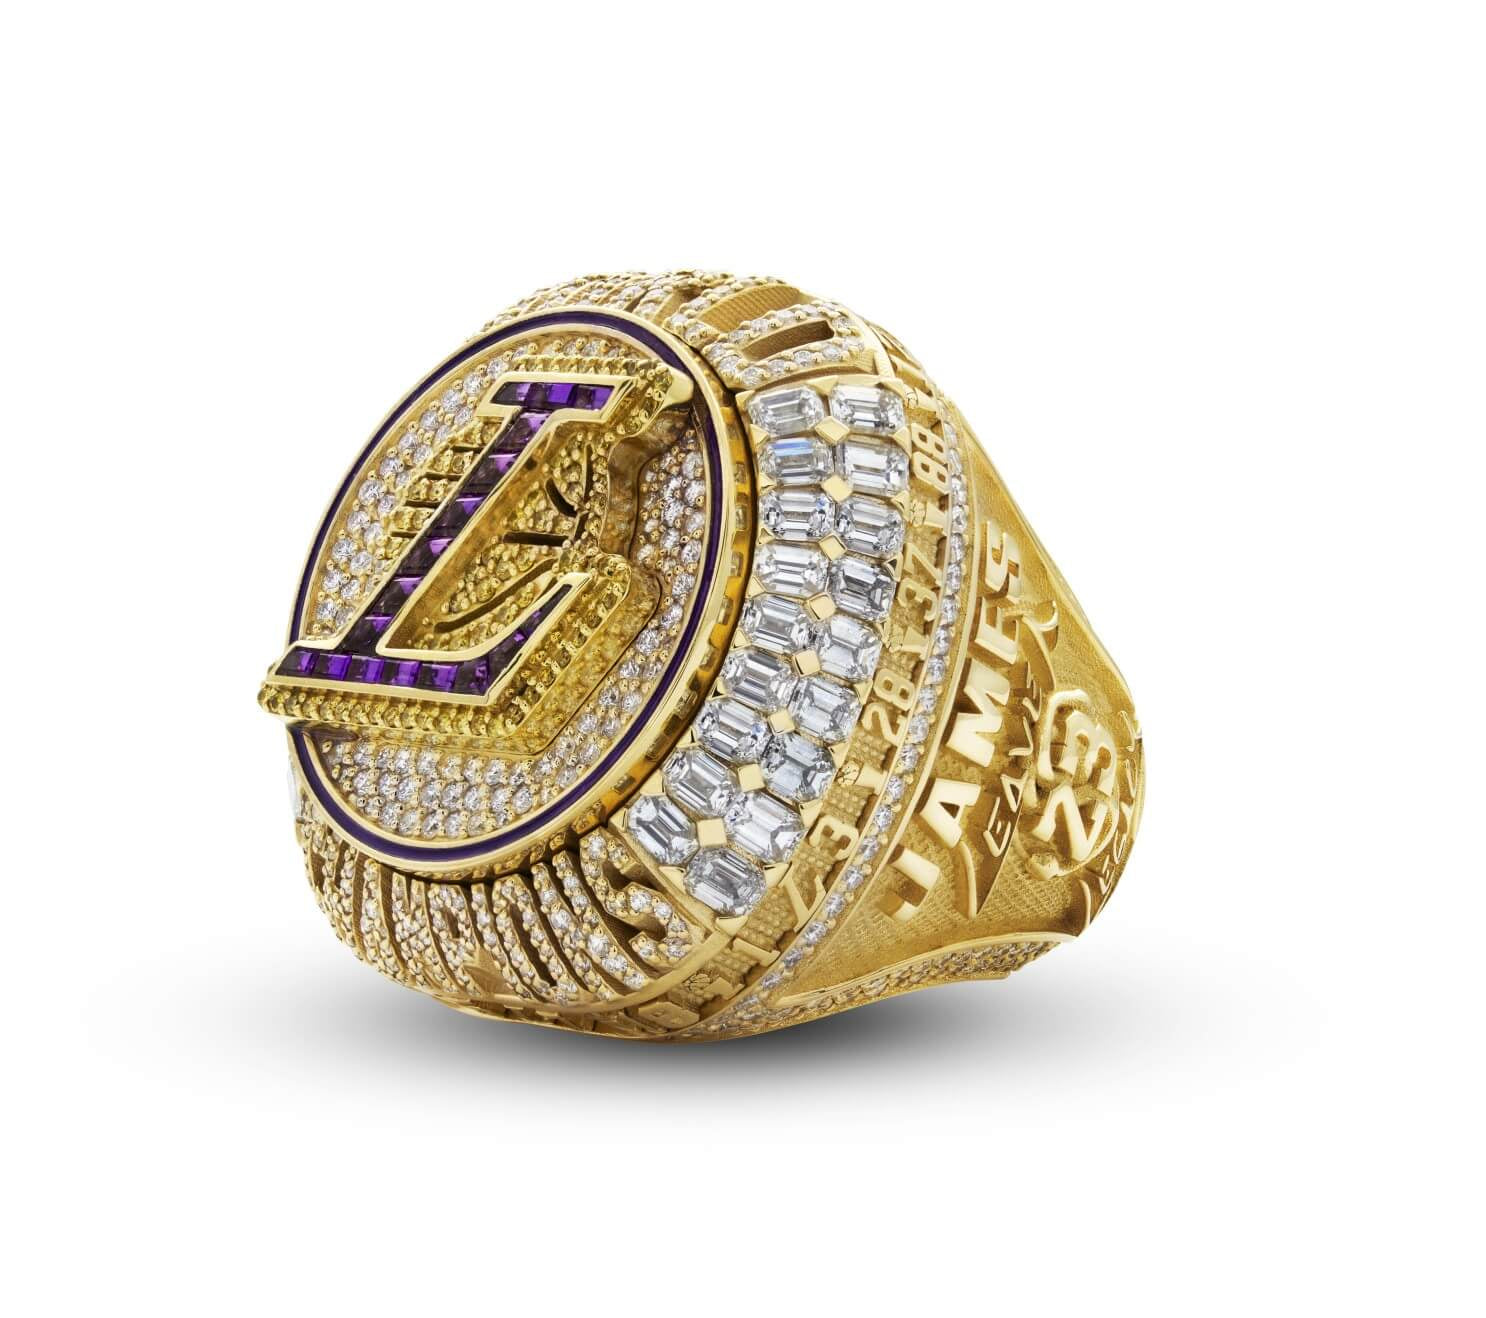 NBA - Lakers championship rings - LeBron James